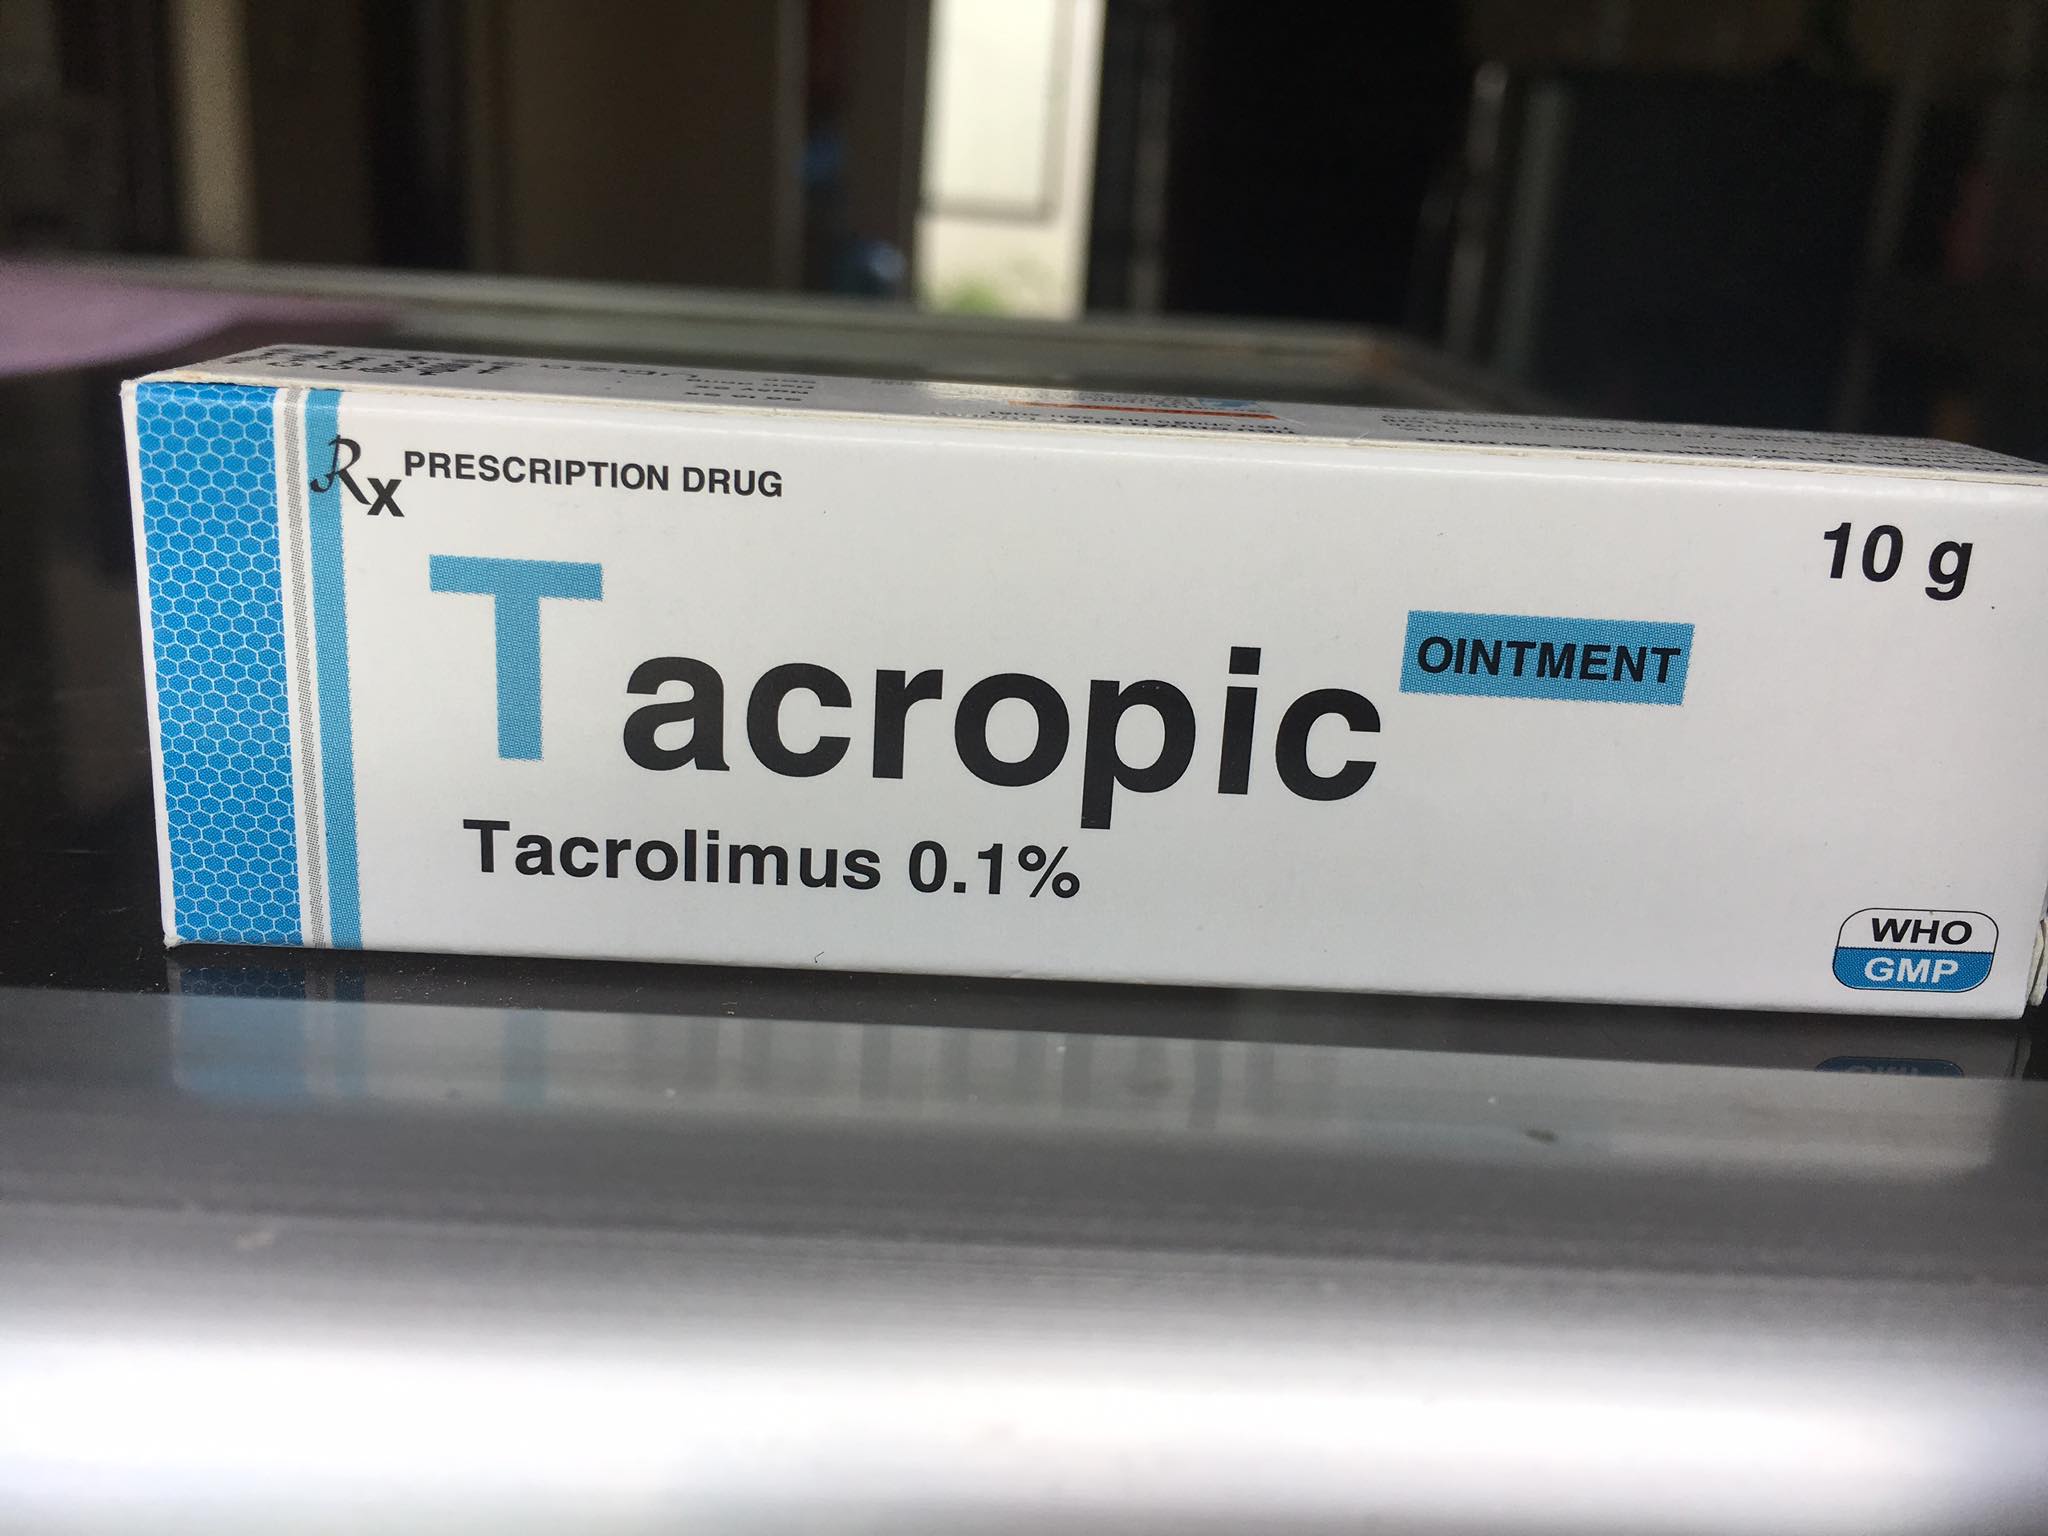 Tacropic 0.1%